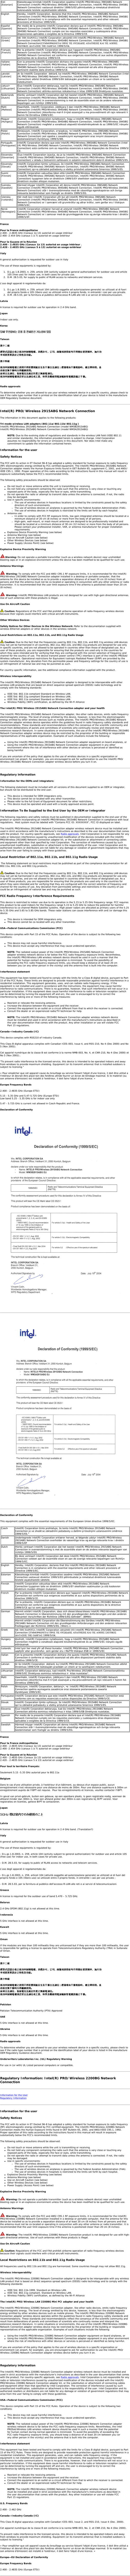 Esti [Estonian] Käesolevaga kinnitab Intel(R) Corporation seadme Intel(R) PRO/Wireless 3965ABG Network Connection (Intel(R) PRO/Wireless 3945ABG Network Connection, Intel(R) PRO/Wireless 3945BG Network Connection) vastavust direktiivi 1999/5/EÜ põhinõuetele ja nimetatud direktiivist tulenevatele teistele asjakohastele sätetele.English Hereby, Intel(R) Corporation, declares that this Intel(R) PRO/Wireless 3965ABG Network Connection (Intel(R) PRO/Wireless 3945ABG Network Connection, Intel(R) PRO/Wireless 3945BG Network Connection) is in compliance with the essential requirements and other relevant provisions of Directive 1999/5/EC.Español [Spanish] Por medio de la presente Intel(R) Corporation declara que el Intel(R) PRO/Wireless 3965ABG Network Connection (Intel(R) PRO/Wireless 3945ABG Network Connection, Intel(R) PRO/Wireless 3945BG Network Connection) cumple con los requisitos esenciales y cualesquiera otras disposiciones aplicables o exigibles de la Directiva 1999/5/CE. Ελληνικ• [Greek] ΜΕ ΤΗΝ ΠΑΡΟΥΣΑ Intel(R) Corporation ∆ΗΛΩΝΕΙ ΟΤΙ Intel(R) PRO/Wireless 3965ABG Network Connection (Intel(R) PRO/Wireless 3945ABG Network Connection, Intel(R) PRO/Wireless 3945BG Network Connection)ΣΥΜΜΟΡΦΩΝΕΤΑΙ ΠΡΟΣ ΤΙΣ ΟΥΣΙΩ∆ΕΙΣ ΑΠΑΙΤΗΣΕΙΣ ΚΑΙ ΤΙΣ ΛΟΙΠΕΣ ΣΧΕΤΙΚΕΣ ∆ΙΑΤΑΞΕΙΣ ΤΗΣ Ο∆ΗΓΙΑΣ 1999/5/ΕΚ.Français [French]  Par la présente Intel(R) Corporation déclare que l&apos;appareil Intel(R) PRO/Wireless 3965ABG Network Connection (Intel(R) PRO/Wireless 3945ABG Network Connection, Intel(R) PRO/Wireless 3945BG Network Connection) est conforme aux exigences essentielles et aux autres dispositions pertinentes de la directive 1999/5/CE.Italiano [Italian] Con la presente Intel(R) Corporation dichiara che questo Intel(R) PRO/Wireless 3965ABG Network Connection (Intel(R) PRO/Wireless 3945ABG Network Connection, Intel(R) PRO/Wireless 3945BG Network Connection) è conforme ai requisiti essenziali ed alle altre disposizioni pertinenti stabilite dalla direttiva 1999/5/CE. Latviski [Latvian] Ar šo Intel(R) Corporation  deklarē, ka Intel(R) PRO/Wireless 3965ABG Network Connection (Intel(R) PRO/Wireless 3945ABG Network Connection, Intel(R) PRO/Wireless 3945BG Network Connection) atbilst Direktīvas 1999/5/EK būtiskajām prasībām un citiem ar to saistītajiem noteikumiem.Lietuvi• [Lithuanian] Šiuo Intel(R) Corporation deklaruoja, kad šis Intel(R) PRO/Wireless 3965ABG Network Connection (Intel(R) PRO/Wireless 3945ABG Network Connection, Intel(R) PRO/Wireless 3945BG Network Connection) atitinka esminius reikalavimus ir kitas 1999/5/EB Direktyvos nuostatas.Nederlands [Dutch] Hierbij verklaart Intel(R) Corporation dat het toestel Intel(R) PRO/Wireless 3965ABG Network Connection (Intel(R) PRO/Wireless 3945ABG Network Connection, Intel(R) PRO/Wireless 3945BG Network Connection) in overeenstemming is met de essentiële eisen en de andere relevante bepalingen van richtlijn 1999/5/EG. Malti [Maltese] Hawnhekk, Intel(R) Corporation, jiddikjara li dan Intel(R) PRO/Wireless 3965ABG Network Connection (Intel(R) PRO/Wireless 3945ABG Network Connection, Intel(R) PRO/Wireless 3945BG Network Connection) jikkonforma mal-ħti•ijiet essenzjali u ma provvedimenti oħrajn relevanti li hemm fid-Dirrettiva 1999/5/EC.Magyar [Hungary] Alulírott, Intel(R) Corporation nyilatkozom, hogy a Intel(R) PRO/Wireless 3965ABG Network Connection (Intel(R) PRO/Wireless 3945ABG Network Connection, Intel(R) PRO/Wireless 3945BG Network Connection) megfelel a vonatkozó alapvetõ követelményeknek és az 1999/5/EC irányelv egyéb elõírásainak.Polski [Polish] Niniejszym, Intel(R) Corporation, o•wiadcza, •e Intel(R) PRO/Wireless 3965ABG Network Connection (Intel(R) PRO/Wireless 3945ABG Network Connection, Intel(R) PRO/Wireless 3945BG Network Connection) jest zgodne z zasadniczymi wymaganiami oraz innymi stosownymi postanowieniami Dyrektywy 1999/5/WE.Português [Portuguese] Intel(R) Corporation declara que este Intel(R) PRO/Wireless 3965ABG Network Connection (Intel(R) PRO/Wireless 3945ABG Network Connection, Intel(R) PRO/Wireless 3945BG Network Connection) está conforme com os requisitos essenciais e outras disposições da Directiva 1999/5/CE. Slovensko [Slovenian] Šiuo Intel(R) Corporation izjavlja, da je ta Intel(R) PRO/Wireless 3965ABG Network Connection (Intel(R) PRO/Wireless 3945ABG Network Connection, Intel(R) PRO/Wireless 3945BG Network Connection) v skladu z bistvenimi zahtevami in ostalimi relevantnimi dolo•ili direktive 1999/5/ES.Slovensky [Slovak] Intel(R) Corporation týmto vyhlasuje, že Intel(R) PRO/Wireless 3965ABG Network Connection (Intel(R) PRO/Wireless 3945ABG Network Connection, Intel(R) PRO/Wireless 3945BG Network Connection) sp••a základné požiadavky a všetky príslušné ustanovenia Smernice 1999/5/ES.Suomi [Finnish] Intel(R) Corporation vakuuttaa täten että Intel(R) PRO/Wireless 3965ABG Network Connection (Intel(R) PRO/Wireless 3945ABG Network Connection, Intel(R) PRO/Wireless 3945BG Network Connection) tyyppinen laite on direktiivin 1999/5/EY oleellisten vaatimusten ja sitä koskevien direktiivin muiden ehtojen mukainen. Svenska [Swedish] Härmed intygar Intel(R) Corporation att denna Intel(R) PRO/Wireless 3965ABG Network Connection (Intel(R) PRO/Wireless 3945ABG Network Connection, Intel(R) PRO/Wireless 3945BG Network Connection) står I överensstämmelse med de väsentliga egenskapskrav och övriga relevanta bestämmelser som framgår av direktiv 1999/5/EG.Íslenska [Icelandic] Hér með lýsir Intel(R) Corporation yfir því að Intel(R) PRO/Wireless 3965ABG Network Connection (Intel(R) PRO/Wireless 3945ABG Network Connection, Intel(R) PRO/Wireless 3945BG Network Connection) er í samræmi við grunnkröfur og aðrar kröfur, sem gerðar eru í tilskipun 1999/5/EC. Norsk [Norwegian]:  Intel(R) Corporation erklærer herved at utstyret Intel(R) PRO/Wireless 3965ABG Network Connection (Intel(R) PRO/Wireless 3945ABG Network Connection, Intel(R) PRO/Wireless 3945BG Network Connection) er i samsvar med de grunnleggende krav og øvrige relevante krav i direktiv 1999/5/EF. FrancePour la France métropolitaine 2.400 - 2.4835 GHz (Canaux 1à 13) autorisé en usage intérieur  2.400 -2.454 GHz (canaux 1 à 7) autorisé en usage extérieur Pour la Guyane et la Réunion  2.400 - 2.4835 GHz (Canaux 1à 13) autorisé en usage intérieur .  2.420 - 2.4835 GHz (canaux 5 à 13) autorisé en usage extérieur Italy A general authorization is requested for outdoor use in Italy The use of these equipments is regulated by: 1.  D.L.gs 1.8.2003, n. 259, article 104 (activity subject to general authorization) for outdoor use and article 105 (free use) for indoor use, in both cases for private use. 2.  D.M. 28.5.03, for supply to public of RLAN access to networks and telecom services. L’uso degli apparati è regolamentato da: 1.  D.L.gs 1.8.2003, n. 259, articoli 104 (attività soggette ad autorizzazione generale) se utilizzati al di fuori del proprio fondo e 105 (libero uso) se utilizzati entro il proprio fondo, in entrambi i casi per uso private. 2.  D.M. 28.5.03, per la fornitura al pubblico dell’accesso R-LAN alle reti e ai servizi di telecomunicazioni. Latvia A license is required for outdoor use for operation in 2.4 GHz band. JapanIndoor use only.Korea  Taiwan  Radio approvalsTo determine whether you are allowed to use your wireless network device in a specific country, please check to see if the radio type number that is printed on the identification label of your device is listed in the manufacture OEM Regulatory Guidance document. Intel(R) PRO/Wireless 2915ABG Network ConnectionThe information in this document applies to the following products: Tri-mode wireless LAN adapters (802.11a/802.11b/802.11g ) Intel(R) PRO/Wireless 2915ABG Network Connection (model WM3B2915ABG) Intel(R) PRO/Wireless 2915ABG Network Connection (model WM3A2915ABG) NOTE: Due to the evolving state of regulations and standards in the wireless LAN field (IEEE 802.11 and similar standards), the information provided herein is subject to change. Intel Corporation assumes no responsibility for errors or omissions in this document. Nor does Intel make any commitment to update the information contained herein. Information for the userSafety NoticesThe FCC with its action in ET Docket 96-8 has adopted a safety standard for human exposure to radio frequency (RF) electromagnetic energy emitted by FCC certified equipment. The Intel(R) PRO/Wireless 2915ABG Network Connection adapter meets the Human Exposure limits found in OET Bulletin 65, supplement C, 2001, and ANSI/IEEE C95.1, 1992. Proper operation of this radio according to the instructions found in this manual will result in exposure substantially below the FCC’s recommended limits. The following safety precautions should be observed: ●     Do not touch or move antenna while the unit is transmitting or receiving. ●     Do not hold any component containing the radio such that the antenna is very close or touching any exposed parts of the body, especially the face or eyes, while transmitting. ●     Do not operate the radio or attempt to transmit data unless the antenna is connected; if not, the radio may be damaged. ●     Use in specific environments: ❍     The use of wireless devices in hazardous locations is limited by the constraints posed by the safety directors of such environments. ❍     The use of wireless devices on airplanes is governed by the Federal Aviation Administration (FAA). ❍     The use of wireless devices in hospitals is restricted to the limits set forth by each hospital. ●     Antenna use: ❍     In order to comply with FCC RF exposure limits, low gain integrated antennas should be located at a minimum distance of 20 cm (8 inches) or more from the body of all persons. ❍     High-gain, wall-mount, or mast-mount antennas are designed to be professionally installed and should be located at a minimum distance of 30 cm (12 inches) or more from the body of all persons. Please contact your professional installer, VAR, or antenna manufacturer for proper installation requirements. ●     Explosive Device Proximity Warning (see below) ●     Antenna Warning (see below)●     Use on Aircraft Caution (see below)●     Other Wireless Devices (see below)●     Power Supply (Access Point) (see below)Explosive Device Proximity WarningWarning: Do not operate a portable transmitter (such as a wireless network device) near unshielded blasting caps or in an explosive environment unless the device has been modified to be qualified for such use. Antenna Warnings Warning: To comply with the FCC and ANSI C95.1 RF exposure limits, it is recommended for the Intel(R) PRO/Wireless 2915ABG Network Connection adapter installed in a desktop or portable computer, that the antenna for this device be installed so as to provide a separation distance of al least 20 cm (8 inches) from all persons and that the antenna must not be co-located or operating in conjunction with any other antenna or radio transmitter. It is recommended that the user limit exposure time if the antenna is positioned closer than 20 cm (8 inches).  Warning: Intel(R) PRO/Wireless LAN products are not designed for use with high-gain directional antennas. Use of such antennas with these products is illegal. Use On Aircraft Caution Caution: Regulations of the FCC and FAA prohibit airborne operation of radio-frequency wireless devices because their signals could interfere with critical aircraft instruments. Other Wireless DevicesSafety Notices for Other Devices in the Wireless Network: Refer to the documentation supplied with wireless Ethernet adapters or other devices in the wireless network. Local Restrictions on 802.11a, 802.11b, and 802.11g Radio Usage Caution: Due to the fact that the frequencies used by 802.11a, 802.11b, and 802.11g wireless LAN devices may not yet be harmonized in all countries, 802.11a, 802.11b, and 802.11g products are designed for use only in specific countries, and are not allowed to be operated in countries other than those of designated use. As a user of these products, you are responsible for ensuring that the products are used only in the countries for which they were intended and for verifying that they are configured with the correct selection of frequency and channel for the country of use. The device transmit power control (TPC) interface is part of the Intel(R) PROSet/Wireless software. Operational restrictions for Equivalent Isotropic Radiated Power (EIRP) are provided by the system manufacturer. Any deviation from the permissible power and frequency settings for the country of use is an infringement of national law and may be punished as such. For country-specific information, see the additional compliance information supplied with the product. Wireless interoperabilityThe Intel(R) PRO/Wireless 2915ABG Network Connection adapter is designed to be interoperable with other wireless LAN products that are based on direct sequence spread spectrum (DSSS) radio technology and to comply with the following standards: ●     IEEE Std. 802.11b compliant Standard on Wireless LAN.●     IEEE Std. 802.11g compliant Standard on Wireless LAN.●     IEEE Std. 802.11a compliant Standard on Wireless LAN.●     Wireless Fidelity (WiFi) certification, as defined by the Wi-Fi Alliance The Intel(R) PRO/Wireless 2915ABG Network Connection adapter and your healthThe Intel(R) PRO/Wireless 2915ABG Network Connection adapter, like other radio devices, emits radio frequency electromagnetic energy. The level of energy emitted by this device, however, is less than the electromagnetic energy emitted by other wireless devices such as mobile phones. The Intel(R) PRO/Wireless 2915ABG Network Connection adapter wireless device operates within the guidelines found in radio frequency safety standards and recommendations. These standards and recommendations reflect the consensus of the scientific community and result from deliberations of panels and committees of scientists who continually review and interpret the extensive research literature. In some situations or environments, the use of the Intel(R) PRO/Wireless 2915ABG Network Connection adapter wireless device may be restricted by the proprietor of the building or responsible representatives of the applicable organization. Examples of such situations include the following: ●     Using the Intel(R) PRO/Wireless 2915ABG Network Connection adapter equipment on board airplanes, or ●     Using the Intel(R) PRO/Wireless 2915ABG Network Connection adapter equipment in any other environment where the risk of interference with other devices or services is perceived or identified as being harmfulIf you are uncertain of the policy that applies to the use of wireless devices in a specific organization or environment (an airport, for example), you are encouraged to ask for authorization to use the Intel(R) PRO/Wireless 2915ABG Network Connection adapter wireless device before you turn it on. Regulatory informationInformation for the OEMs and Integrators:  The following statement must be included with all versions of this document supplied to an OEM or integrator, but should not be distributed to the end user. ●     This device is intended for OEM integrators only. ●     This device cannot be co-located with any other transmitter. ●     Please refer to the full Grant of Equipment document for other restrictions. ●     This device must be operated and used with a locally approved access point.Information To Be Supplied to the End User by the OEM or Integrator The following regulatory and safety notices must be published in documentation supplied to the end user of the product or system incorporating an Intel(R) PRO/Wireless 2915ABG Network Connection in compliance with local regulations.  Host system must be labeled with &quot;Contains FCC ID: XXXXXXXX&quot;, FCC ID displayed on label. The Intel(R) PRO/Wireless 2915ABG Network Connection adapter wireless network device must be installed and used in strict accordance with the manufacturer&apos;s instructions as described in the user documentation that comes with the product. For country-specific approvals, see Radio approvals. Intel Corporation is not responsible for any radio or television interference caused by unauthorized modification of the devices included with the Intel(R) PRO/Wireless 2915ABG Network Connection adapter kit, or the substitution or attachment of connecting cables and equipment other than that specified by Intel Corporation. The correction of interference caused by such unauthorized modification, substitution or attachment is the responsibility of the user. Intel Corporation and its authorized resellers or distributors are not liable for any damage or violation of government regulations that may arise from the user failing to comply with these guidelines. Local Restriction of 802.11a, 802.11b, and 802.11g Radio Usage  The following statement on local restrictions must be published as part of the compliance documentation for all 802.11a, 802.11b, and 802.11g products.  Caution: Due to the fact that the frequencies used by 802.11a, 802.11b, and 802.11g wireless LAN devices may not yet be harmonized in all countries, 802.11a, 802.11b, and 802.11g products are designed for use only in specific countries, and are not allowed to be operated in countries other than those of designated use. As a user of these products, you are responsible for ensuring that the products are used only in the countries for which they were intended and for verifying that they are configured with the correct selection of frequency and channel for the country of use. Any deviation from permissible settings and restrictions in the country of use could be an infringement of national law and may be punished as such. FCC Radio Frequency Interference Requirements This device is restricted to indoor use due to its operation in the 5.15 to 5.25 GHz frequency range. FCC requires this product to be used indoors for the frequency range 5.15 to 5.25 GHz to reduce the potential for harmful interference to co-channel Mobile Satellite systems. High power radars are allocated as primary users of the 5.25 to 5.35 GHz and 5.65 to 5.85 GHz bands. These radar stations can cause interference with and /or damage this device. ●     This device is intended for OEM integrators only.●     This device cannot be co-located with any other transmitter. USA—Federal Communications Commission (FCC)This device complies with Part 15 of the FCC Rules. Operation of the device is subject to the following two conditions: ●     This device may not cause harmful interference. ●     This device must accept any interference that may cause undesired operation.NOTE: The radiated output power of the Intel(R) PRO/Wireless 2915ABG Network Connection adapter wireless network device is far below the FCC radio frequency exposure limits. Nevertheless, the Intel(R) PRO/Wireless LAN wireless network device should be used in such a manner that the potential for human contact during normal operation is minimized. To avoid the possibility of exceeding the FCC radio frequency exposure limits, you should keep a distance of at least 20 cm between you (or any other person in the vicinity) and the antenna that is built into the computer.Interference statementThis equipment has been tested and found to comply with the limits for a Class B digital device, pursuant to Part 15 of the FCC Rules. These limits are designed to provide reasonable protection against harmful interference in a residential installation. This equipment generates, uses, and can radiate radio frequency energy. If the equipment is not installed and used in accordance with the instructions, the equipment may cause harmful interference to radio communications. There is no guarantee, however, that such interference will not occur in a particular installation. If this equipment does cause harmful interference to radio or television reception (which can be determined by turning the equipment off and on), the user is encouraged to try to correct the interference by taking one or more of the following measures: ●     Reorient or relocate the receiving antenna. ●     Increase the distance between the equipment and the receiver. ●     Connect the equipment to an outlet on a circuit different from that to which the receiver is connected. ●     Consult the dealer or an experienced radio/TV technician for help. NOTE: The Intel(R) PRO/Wireless 2915ABG Network Connection adapter wireless network device must be installed and used in strict accordance with the manufacturer&apos;s instructions as described in the user documentation that comes with the product. Any other installation or use will violate FCC Part 15 regulations.Canada—Industry Canada (IC)This device complies with RSS210 of Industry Canada. This Class B digital apparatus complies with Canadian ICES-003, Issue 4, and RSS-210, No 4 (Dec 2000) and No 5 (Nov 2001). Cet appariel numérique de la classe B est conforme à la norme NMB-003, No. 4, et CNR-210, No 4 (Dec 2000) et No 5 (Nov 2001).. &quot;To prevent radio interference to the licensed service, this device is intended to be operated indoors and away from windows to provide maximum shielding. Equipment (or its transmit antenna) that is installed outdoors is subject to licensing.&quot; « Pour empêcher que cet appareil cause du brouillage au service faisant l&apos;objet d&apos;une licence, il doit être utilisé a l&apos;intérieur et devrait être placé loin des fenêtres afinde fournir un écran de blindage maximal. Si le matériel (ou son antenne d&apos;émission) est installé à l&apos;extérieur, il doit faire l&apos;objet d&apos;une licence. » Europe Frequency Bands 2.400 - 2.4835 GHz (Europe ETSI)  5.15 - 5.35 GHz and 5.47-5.725 GHz (Europe ETSI) Low band 5.25 - 5.35 GHz is for indoor use only  5.47 - 5.725 GHz is current not allowed in Czech Republic and France. Declaration of Conformity   Declaration of Conformity This equipment complies with the essential requirements of the European Union directive 1999/5/EC. Czech Intel(R) Corporation tímto prohlašuje, že tento Intel(R) PRO/Wireless 2915ABG Network Connection je ve shodě se základními požadavky a dalšími p•íslušnými ustanoveními směrnice 1999/5/ES.&quot;Danish Undertegnede Intel(R) Corporation erklærer herved, at følgende udstyr Intel(R) PRO/Wireless 2915ABG Network Connection overholder de væsentlige krav og øvrige relevante krav i direktiv 1999/5/EFDutch Hierbij verklaart Intel(R) Corporation dat het toestel Intel(R) PRO/Wireless 2915ABG Network Connection in overeenstemming is met de essentiële eisen en de andere relevante bepalingen van richtlijn 1999/5/EG Bij deze verklaart Intel(R) Corporation dat deze Intel(R) PRO/Wireless 2915ABG Network Connection voldoet aan de essentiële eisen en aan de overige relevante bepalingen van Richtlijn 1999/5/EC.English Hereby, Intel(R) Corporation, declares that this Intel(R) PRO/Wireless 2915ABG Network Connection is in compliance with the essential requirements and other relevant provisions of Directive 1999/5/EC.Estonian Käesolevaga kinnitab Intel(R) Corporation seadme Intel(R) PRO/Wireless 2915ABG Network Connection vastavust direktiivi 1999/5/EÜ põhinõuetele ja nimetatud direktiivist tulenevatele teistele asjakohastele sätetele.Finnish Intel(R) Corporation vakuuttaa täten että Intel(R) PRO/Wireless 2915ABG Network Connection tyyppinen laite on direktiivin 1999/5/EY oleellisten vaatimusten ja sitä koskevien direktiivin muiden ehtojen mukainen. French Par la présente Intel(R) Corporation déclare que l&apos;appareil Intel(R) PRO/Wireless 2915ABG Network Connection est conforme aux exigences essentielles et aux autres dispositions pertinentes de la directive 1999/5/CE. Par la présente, Intel(R) Corporation déclare que ce Intel(R) PRO/Wireless 2915ABG Network Connection est conforme aux exigences essentielles et aux autres dispositions de la directive 1999/5/CE qui lui sont applicables. German Hiermit erklärt Intel(R) Corporation, dass sich dieser/diese/dieses Intel(R) PRO/Wireless 2915ABG Network Connection in Übereinstimmung mit den grundlegenden Anforderungen und den anderen relevanten Vorschriften der Richtlinie 1999/5/EG befindet&quot;. (BMWi)Hiermit erklärt Intel(R) Corporation die Übereinstimmung des Gerätes Intel(R) PRO/Wireless 2915ABG Network Connection mit den grundlegenden Anforderungen und den anderen relevanten Festlegungen der Richtlinie 1999/5/EG. (Wien).=Greek ΜΕ ΤΗΝ ΠΑΡΟΥΣΑ Intel(R) Corporation ∆ΗΛΩΝΕΙ ΟΤΙ Intel(R) PRO/Wireless 2915ABG Network Connection ΣΥΜΜΟΡΦΩΝΕΤΑΙ ΠΡΟΣ ΤΙΣ ΟΥΣΙΩ∆ΕΙΣ ΑΠΑΙΤΗΣΕΙΣ ΚΑΙ ΤΙΣ ΛΟΙΠΕΣ ΣΧΕΤΙΚΕΣ ∆ΙΑΤΑΞΕΙΣ ΤΗΣ Ο∆ΗΓΙΑΣ 1999/5/ΕΚ.Hungary Alulírott, Intel(R) Corporation nyilatkozom, hogy a Intel(R) PRO/Wireless 2915ABG Network Connection megfelel a vonatkozó alapvetõ követelményeknek és az 1999/5/EC irányelv egyéb elõírásainak.Icelandic  Intel lysir her med yfir að thessi bunadur, Intel(R) PRO/Wireless 2915ABG Network Connection , uppfyllir allar grunnkrofur, sem gerdar eru i R&amp;TTE tilskipun ESB nr 1999/5/EC Italian Con la presente Intel(R) Corporation dichiara che questo Intel(R) PRO/Wireless 2915ABG Network Connection è conforme ai requisiti essenziali ed alle altre disposizioni pertinenti stabilite dalla direttiva 1999/5/CE. Latvian Ar šo Intel(R) Corporation  deklarē, ka Intel(R) PRO/Wireless 2915ABG Network Connection atbilst Direktīvas 1999/5/EK būtiskajām prasībām un citiem ar to saistītajiem noteikumiem.Lithuanian Intel(R) Corporation deklaruoja, kad Intel(R) Pro/Wireless 2915ABG Network Connectionatitinka 1999/5/EC Direktyvos esminius reikalavimus ir  kitas nuostatas&quot;.Malti Hawnhekk, Intel(R) Corporation, jiddikjara li dan Intel(R) PRO/Wireless 2915ABG Network Connection jikkonforma mal-ħti•ijiet essenzjali u ma provvedimenti oħrajn relevanti li hemm fid-Dirrettiva 1999/5/EC.Polish Niniejszym, Intel(R) Corporation, deklaruj•, •e  Intel(R) PRO/Wireless 2915ABG Network Connection spełnia wymagania zasadnicze oraz stosowne postanowienia zawarte  Dyrektywie 1999/5/EC.Portuguese Intel(R) Corporation declara que este Intel(R) PRO/Wireless 2915ABG Network Connection está conforme com os requisitos essenciais e outras disposições da Directiva 1999/5/CE. Slovak Intel(R) Corporation týmto vyhlasuje, že Intel(R) PRO/Wireless 2915ABG Network Connection sp••a základné požiadavky a všetky príslušné ustanovenia Smernice 1999/5/ES.Slovenia Šiuo Intel(R) Corporation deklaruoja, kad šis Intel(R) PRO/Wireless 2915ABG Network Connection atitinka esminius reikalavimus ir kitas 1999/5/EB Direktyvos nuostatas.Spanish Por medio de la presente Intel(R) Corporation declara que el Intel(R) PRO/Wireless 2915ABG Network Connection cumple con los requisitos esenciales y cualesquiera otras disposiciones aplicables o exigibles de la Directiva 1999/5/CE. Swedish Härmed intygar Intel(R) Corporation att denna Intel(R) PRO/Wireless 2915ABG Network Connection står I överensstämmelse med de väsentliga egenskapskrav och övriga relevanta bestämmelser som framgår av direktiv 1999/5/EG. France Pour la France métropolitaine 2.400 - 2.4835 GHz (Canaux 1à 13) autorisé en usage intérieur  2.400 -2.454 GHz (canaux 1 à 7) autorisé en usage extérieur Pour la Guyane et la Réunion  2.400 - 2.4835 GHz (Canaux 1à 13) autorisé en usage intérieur .  2.420 - 2.4835 GHz (canaux 5 à 13) autorisé en usage extérieur Pour tout le territoire Français: Seulement 5.15 -5.35 GHz autorisé pour le 802.11a Belgium Dans le cas d&apos;une utilisation privée, à l&apos;extérieur d&apos;un bâtiment, au-dessus d&apos;un espace public, aucun enregistrement n&apos;est nécessaire pour une distance de moins de 300m. Pour une distance supérieure à 300m un enregistrement auprès de l&apos;IBPT est requise.  Pour les enregistrements et licences, veuillez contacter l&apos;IBPT. In geval van privé-gebruik, buiten een gebouw, op een openbare plaats, is geen registratie nodig, wanneer de afstand minder dan 300m is. Voor een afstand groter dan 300m is een registratie bij BIPT vereist. Voor registraties en licenties, gelieve BIPT te contacteren. Japan Latvia A license is required for outdoor use for operation in 2.4 GHz band. (Translation?) Italy A general authorization is requested for outdoor use in Italy The use of these equipments is regulated by: - D.L.gs 1.8.2003, n. 259, article 104 (activity subject to general authorization) for outdoor use and article 105 (free use) for indoor use, in both cases for private use. - D.M. 28.5.03, for supply to public of RLAN access to networks and telecom services. L’uso degli apparati è regolamentato da: - D.L.gs 1.8.2003, n. 259, articoli 104 (attività soggette ad autorizzazione generale) se utilizzati al di fuori del proprio fondo e 105 (libero uso) se utilizzati entro il proprio fondo, in entrambi i casi per uso privato ; - D.M. 28.5.03, per la fornitura al pubblico dell’accesso R-LAN alle reti e ai servizi di telecomunicazioni. Greece A license is required for the outdoor use of band 5.470 – 5.725 GHz. Belarus2.4 GHz OFDM (802.11g) is not allowed at this time. Indonesia 5 GHz interface is not allowed at this time. Kuwait5 GHz interface is not allowed at this time. Oman If the modules are less than 100 milliwatts they are unlicensed but if they are more than 100 milliwatts, the user is responsible for getting a license to operate from Telecommunications Regulatory Authority (TRA) in Sultanate of Oman. Taiwan     PakistanPakistan Telecommunication Authority (PTA) Approved UAE5 GHz interface is not allowed at this time. Ukraine5 GHz interface is not allowed at this time. Radio approvalsTo determine whether you are allowed to use your wireless network device in a specific country, please check to see if the radio type number that is printed on the identification label of your device is listed in the manufacture OEM Regulatory Guidance document. Underwriters Laboratories Inc. (UL) Regulatory Warning For use in (or with) UL Listed personal computers or compatible. Regulatory Information: Intel(R) PRO/Wireless 2200BG Network Connection Information for the User Regulatory Information Information for the userSafety NoticesThe FCC with its action in ET Docket 96-8 has adopted a safety standard for human exposure to radio frequency (RF) electromagnetic energy emitted by FCC certified equipment. The Intel(R) PRO/Wireless 2200BG Network Connection meets the Human Exposure limits found in OET Bulletin 65, 2001, and ANSI/IEEE C95.1, 1992. Proper operation of this radio according to the instructions found in this manual will result in exposure substantially below the FCC’s recommended limits. The following safety precautions should be observed: ●     Do not touch or move antenna while the unit is transmitting or receiving. ●     Do not hold any component containing the radio such that the antenna is very close or touching any exposed parts of the body, especially the face or eyes, while transmitting. ●     Do not operate the radio or attempt to transmit data unless the antenna is connected; if not, the radio may be damaged. ●     Use in specific environments: ❍     The use of wireless devices in hazardous locations is limited by the constraints posed by the safety directors of such environments. ❍     The use of wireless devices on airplanes is governed by the Federal Aviation Administration (FAA). ❍     The use of wireless devices in hospitals is restricted to the limits set forth by each hospital.●     Explosive Device Proximity Warning (see below) ●     Antenna Warning (see below) ●     Use on Aircraft Caution (see below) ●     Other Wireless Devices (see below) ●     Power Supply (Access Point) (see below)Explosive Device Proximity Warning Warning: Do not operate a portable transmitter (such as a wireless network device) near unshielded blasting caps or in an explosive environment unless the device has been modified to be qualified for such use. Antenna Warnings Warning: To comply with the FCC and ANSI C95.1 RF exposure limits, it is recommended for the Intel(R) PRO/Wireless 2200BG Network Connection installed in a desktop or portable computer, that the antenna for this device be installed so as to provide a separation distance of al least 20 cm (8 inches) from all persons and that the antenna must not be co-located or operating in conjunction with any other antenna or radio transmitter. It is recommended that the user limit exposure time if the antenna is positioned closer than 20 cm (8 inches).  Warning: The Intel(R) PRO/Wireless 2200BG Network Connection product is not designed for use with high-gain directional antennas. Use of such antennas with these products is illegal. Use On Aircraft Caution Caution: Regulations of the FCC and FAA prohibit airborne operation of radio-frequency wireless devices because their signals could interfere with critical aircraft instruments. Local Restrictions on 802.11b and 802.11g Radio UsageAll frequencies used by 802.11b and 802.11g are harmonized. Some countries though may not allow 802.11g. Wireless interoperabilityThe Intel(R) PRO/Wireless 2200BG Network Connection adapter is designed to be interoperable with any wireless LAN product that is based on direct sequence spread spectrum (DSSS) radio technology and to comply with the following standards: ●     IEEE Std. 802.11b-1999. Standard on Wireless LAN. ●     IEEE Std. 802.11g compliant. Standard on Wireless LAN. ●     Wireless Fidelity (WiFi) certification, as defined by the Wi-Fi Alliance The Intel(R) PRO/Wireless LAN 2200BG Mini PCI adapter and your healthThe Intel(R) PRO/Wireless 2200BG Network Connection adapter, like other radio devices, emits radio frequency electromagnetic energy. The level of energy emitted by this device, however, is less than the electromagnetic energy emitted by other wireless devices such as mobile phones. The Intel(R) PRO/Wireless 2200BG Network Connection adapter wireless device operates within the guidelines found in radio frequency safety standards and recommendations. These standards and recommendations reflect the consensus of the scientific community and result from deliberations of panels and committees of scientists who continually review and interpret the extensive research literature. In some situations or environments, the use of the Intel(R) PRO/Wireless 2200BG Network Connection adapter wireless device may be restricted by the proprietor of the building or responsible representatives of the applicable organization. Examples of such situations include the following: ●     Using the Intel(R) PRO/Wireless 2200BG Network Connection adapter equipment on board airplanes, or ●     Using the Intel(R) PRO/Wireless 2200BG Network Connection adapter equipment in any other environment where the risk of interference with other devices or services is perceived or identified as being harmful.If you are uncertain of the policy that applies to the use of wireless devices in a specific organization or environment (an airport, for example), you are encouraged to ask for authorization to use the Intel(R) PRO/Wireless 2200BG Network Connection adapter wireless device before you turn it on. Regulatory informationThe Intel(R) PRO/Wireless 2200BG Network Connection adapter wireless network device must be installed and used in strict accordance with the manufacturer&apos;s instructions as described in the user documentation that comes with the product. For country-specific approvals, see Radio approvals. Intel Corporation is not responsible for any radio or television interference caused by unauthorized modification of the devices included with the Intel(R) PRO/Wireless 2200BG Network Connection adapter kit, or the substitution or attachment of connecting cables and equipment other than that specified by Intel Corporation. The correction of interference caused by such unauthorized modification, substitution or attachment is the responsibility of the user. Intel Corporation and its authorized resellers or distributors are not liable for any damage or violation of government regulations that may arise from the user failing to comply with these guidelines. USA—Federal Communications Commission (FCC)This device complies with Part 15 of the FCC Rules. Operation of the device is subject to the following two conditions: ●     This device may not cause harmful interference. ●     This device must accept any interference that may cause undesired operation.NOTE: The radiated output power of the Intel(R) PRO/Wireless 2200BG Network Connection adapter wireless network device is far below the FCC radio frequency exposure limits. Nevertheless, the Intel PROSet/Wireless LAN wireless network device should be used in such a manner that the potential for human contact during normal operation is minimized. To avoid the possibility of exceeding the FCC radio frequency exposure limits, you should keep a distance of at least 20 cm between you (or any other person in the vicinity) and the antenna that is built into the computer. Interference statementThis equipment has been tested and found to comply with the limits for a Class B digital device, pursuant to Part 15 of the FCC Rules. These limits are designed to provide reasonable protection against harmful interference in a residential installation. This equipment generates, uses, and can radiate radio frequency energy. If the equipment is not installed and used in accordance with the instructions, the equipment may cause harmful interference to radio communications. There is no guarantee, however, that such interference will not occur in a particular installation. If this equipment does cause harmful interference to radio or television reception (which can be determined by turning the equipment off and on), the user is encouraged to try to correct the interference by taking one or more of the following measures: ●     Reorient or relocate the receiving antenna. ●     Increase the distance between the equipment and the receiver. ●     Connect the equipment to an outlet on a circuit different from that to which the receiver is connected. ●     Consult the dealer or an experienced radio/TV technician for help.NOTE: The Intel(R) PRO/Wireless 2200BG Network Connection adapter wireless network device must be installed and used in strict accordance with the manufacturer&apos;s instructions as described in the user documentation that comes with the product. Any other installation or use will violate FCC Part 15 regulations. U.S. Frequency Bands 2.400 - 2.462 GHz  Canada—Industry Canada (IC)This Class B digital apparatus complies with Canadian ICES-003, Issue 2, and RSS-210, Issue 4 (Dec. 2000). Cet appariel numérique de la classe B est conforme à la norme NMB-003, No. 2, et CNR-210, No 4 (Dec 2000). To prevent radio interference to the licensed service, this device is intended to be operated indoors and away from windows to provide maximum shielding. Equipment (or its transmit antenna) that is installed outdoors is subject to licensing.&quot; « Pour empêcher que cet appareil cause du brouillage au service faisant l&apos;objet d&apos;une licence, il doit être utilisé a l&apos;intérieur et devrait être placé loin des fenêtres afinde fournir un écran de blindage maximal. Si le matériel (ou son antenne d&apos;émission) est installé à l&apos;extérieur, il doit faire l&apos;objet d&apos;une licence. » Europe—EU Declaration of Conformity Europe Frequency Bands 2.400 - 2.4835 GHz (Europe ETSI) 